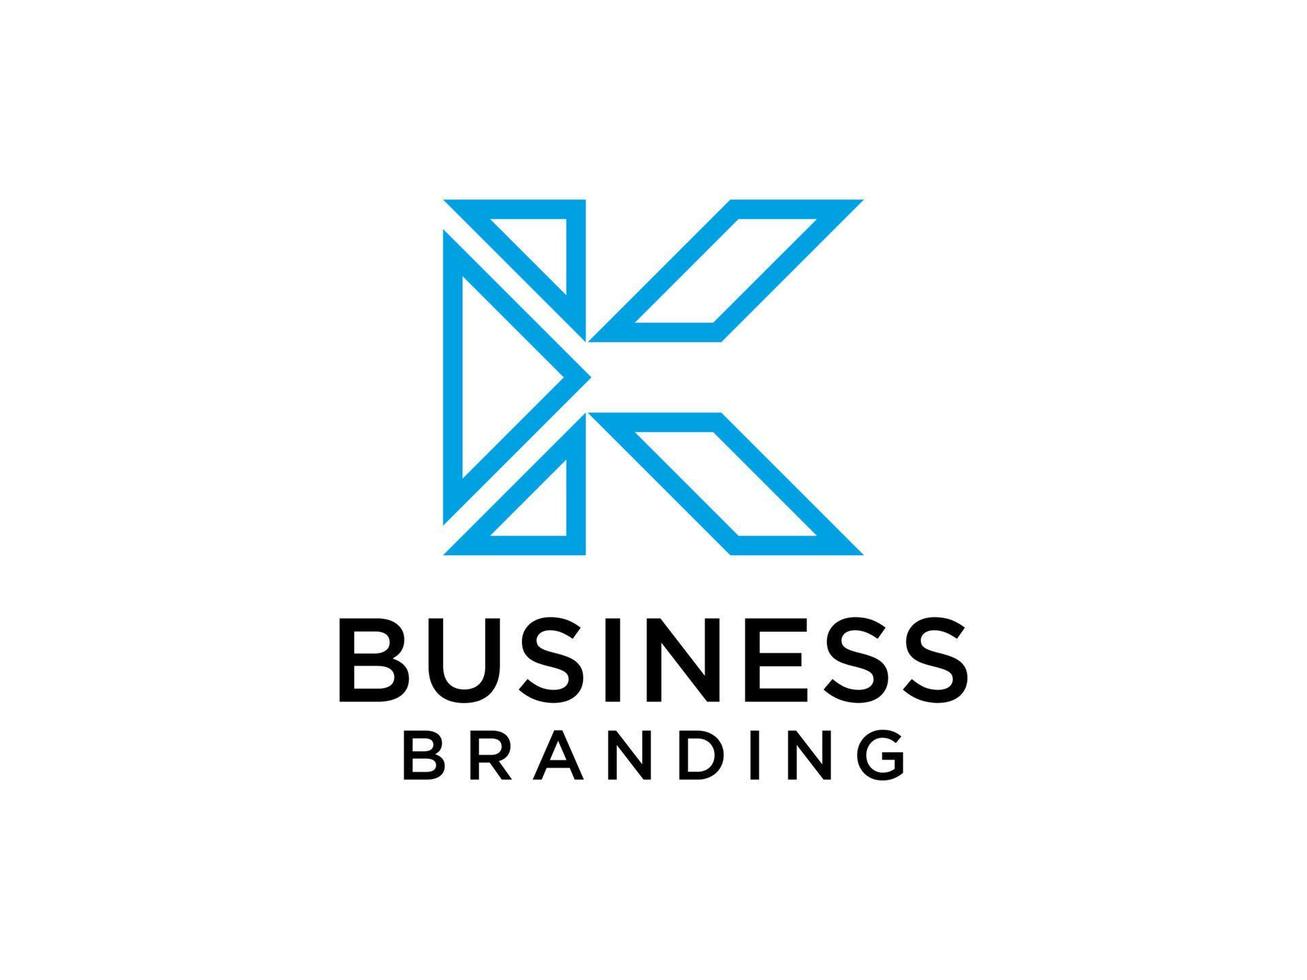 abstrato letra inicial k logotipo. estilo de origami de forma de seta geométrica azul isolado no fundo branco. utilizável para logotipos de negócios e branding. elemento de modelo de design de logotipo de vetor plana.